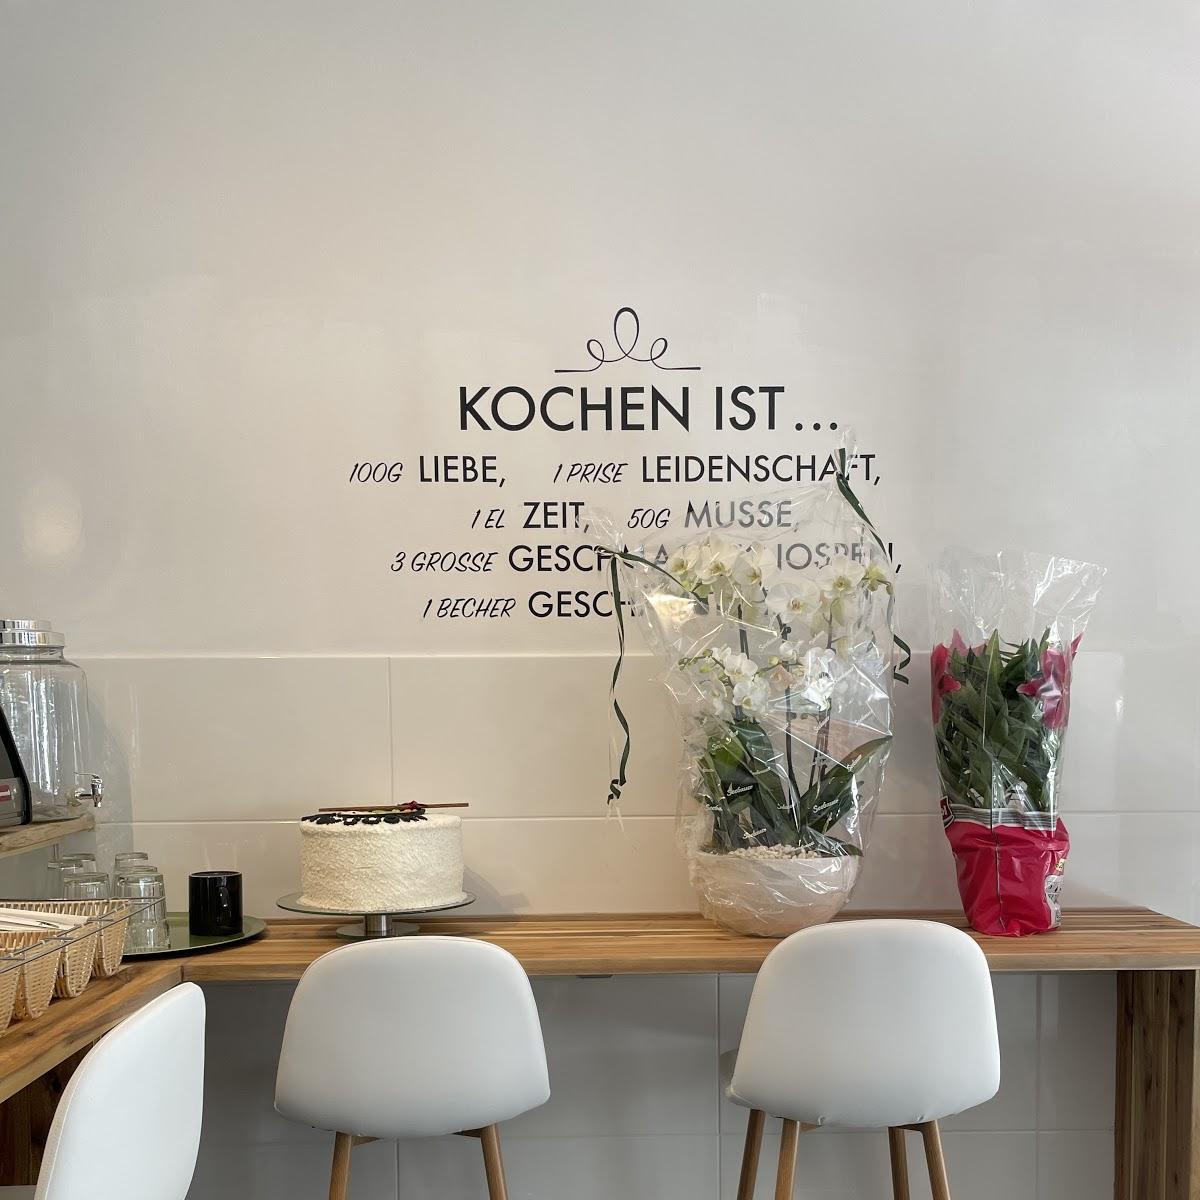 Restaurant "Koi Sushi & More" in München